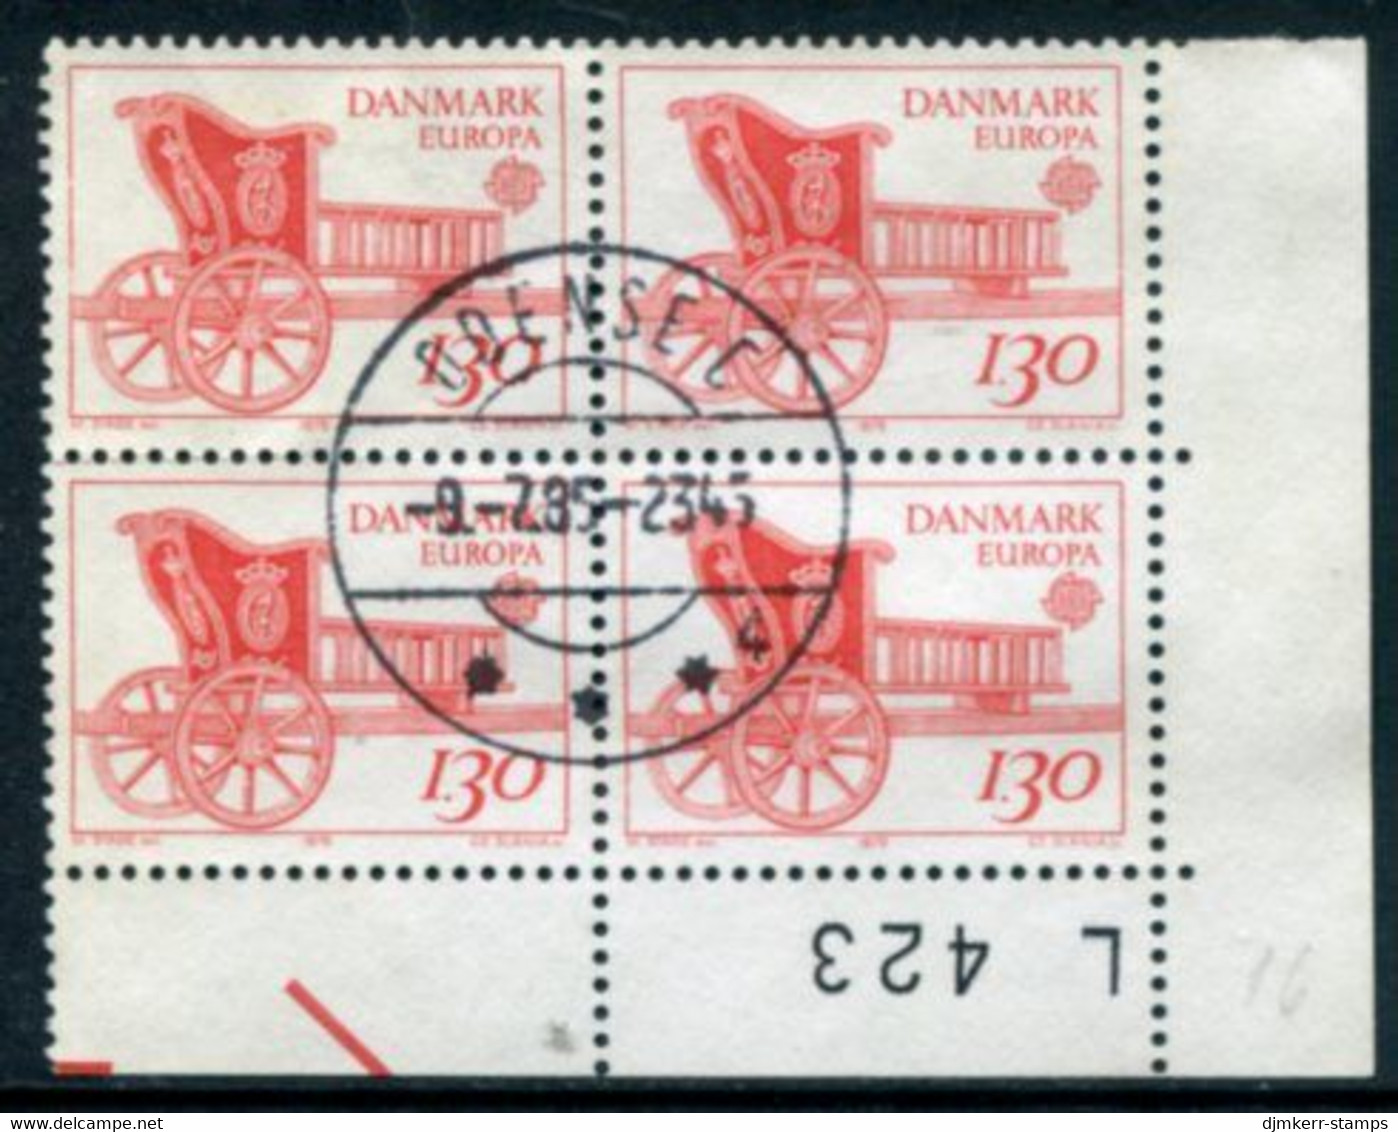 DENMARK 1979 Eurioa: History Of The Post 1.30 Kr. Block Of 4 Used   Michel 686 - Gebruikt